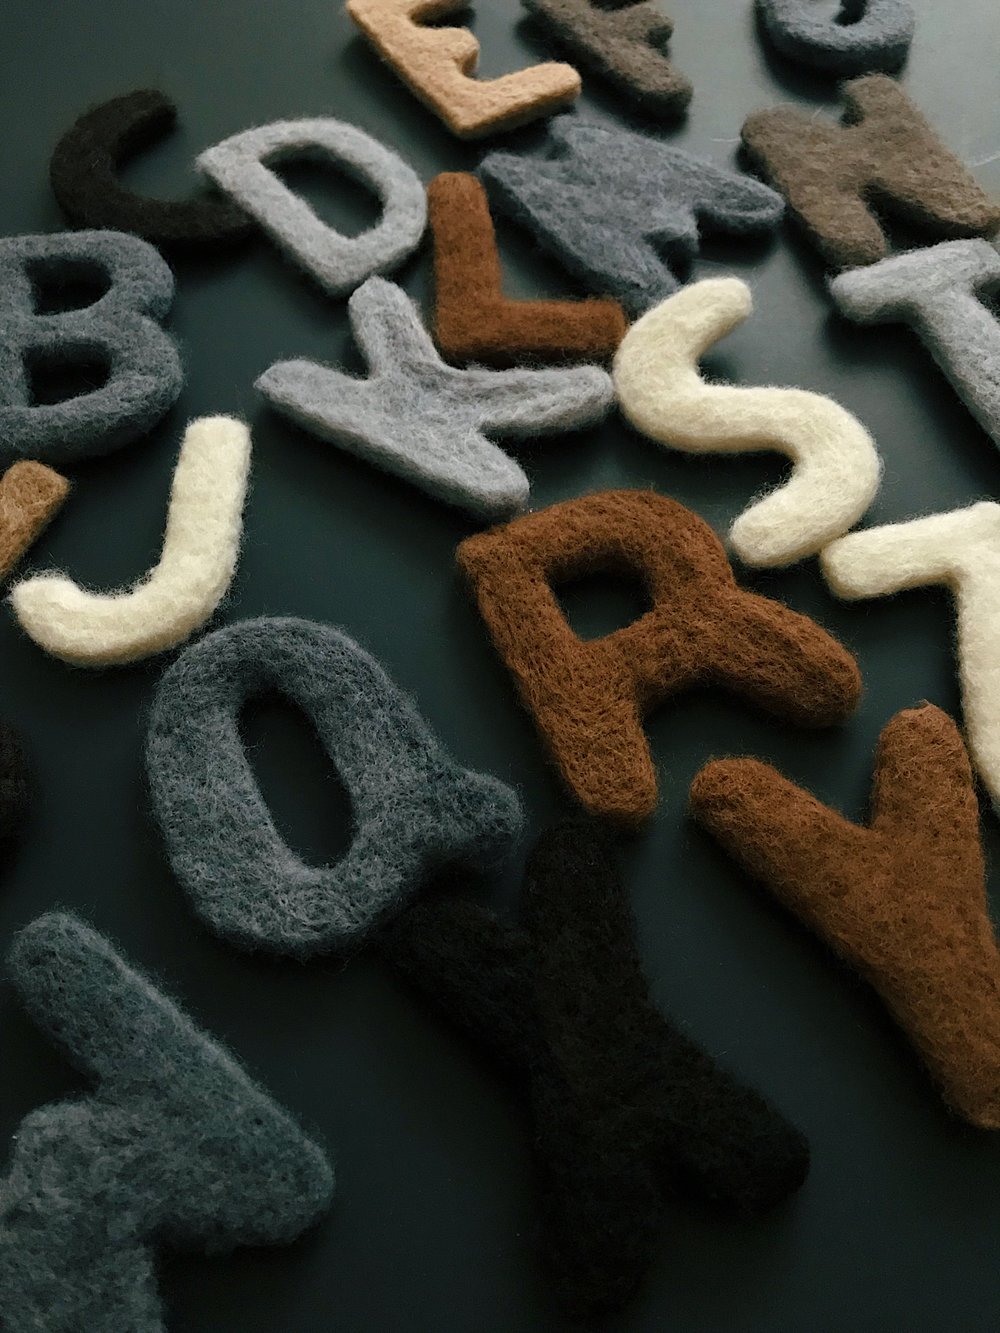 Wool Fabric Alphabet letters — Yael and Yarn